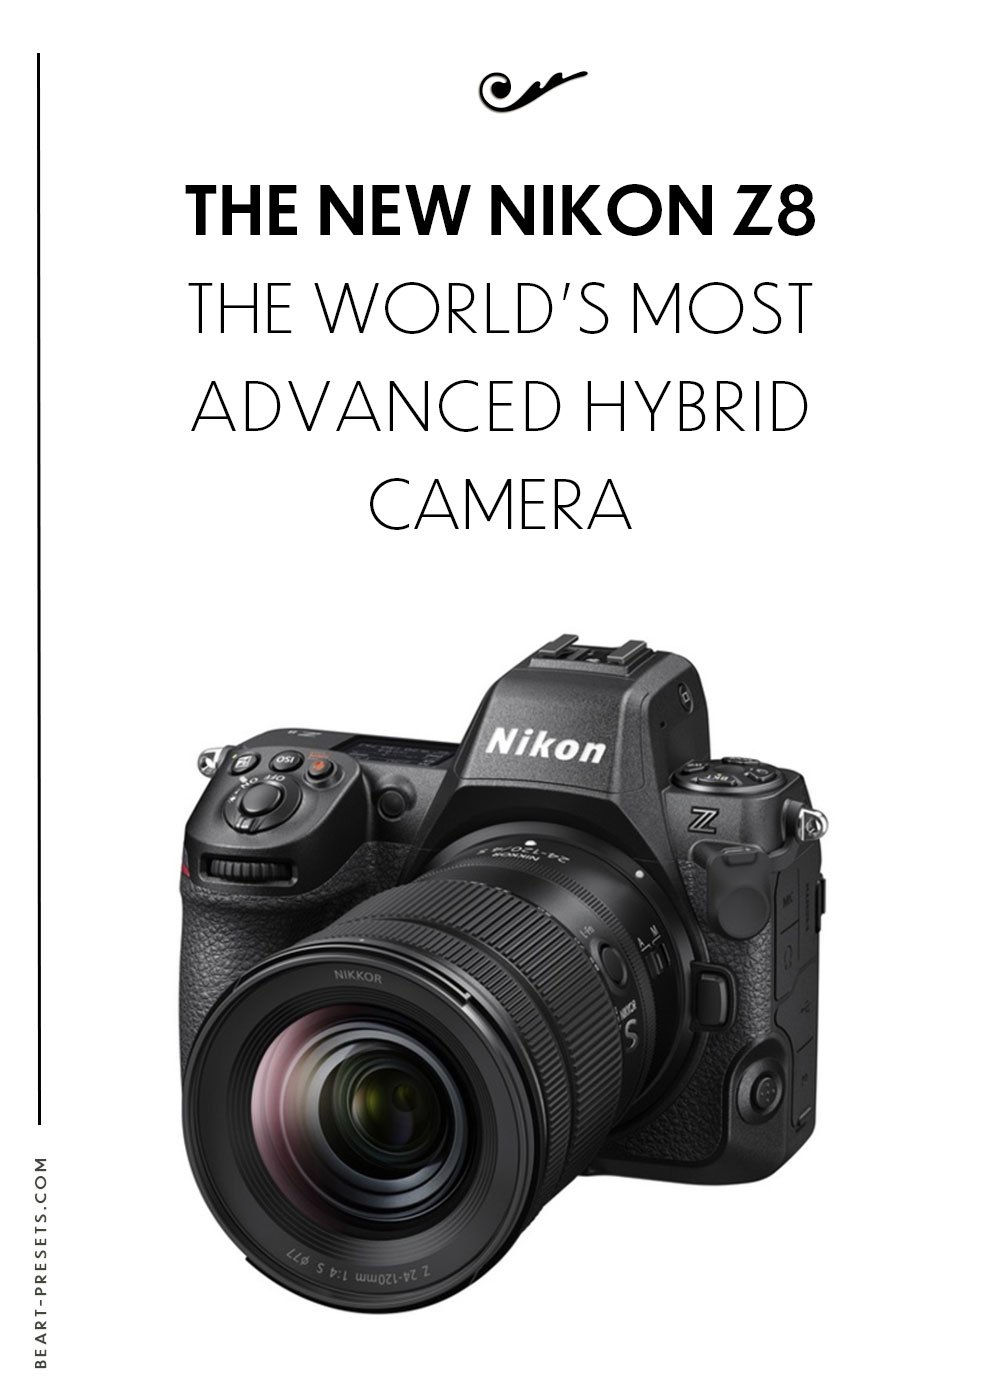  Nikon Z 8, Professional full-frame mirrorless stills/video  hybrid camera